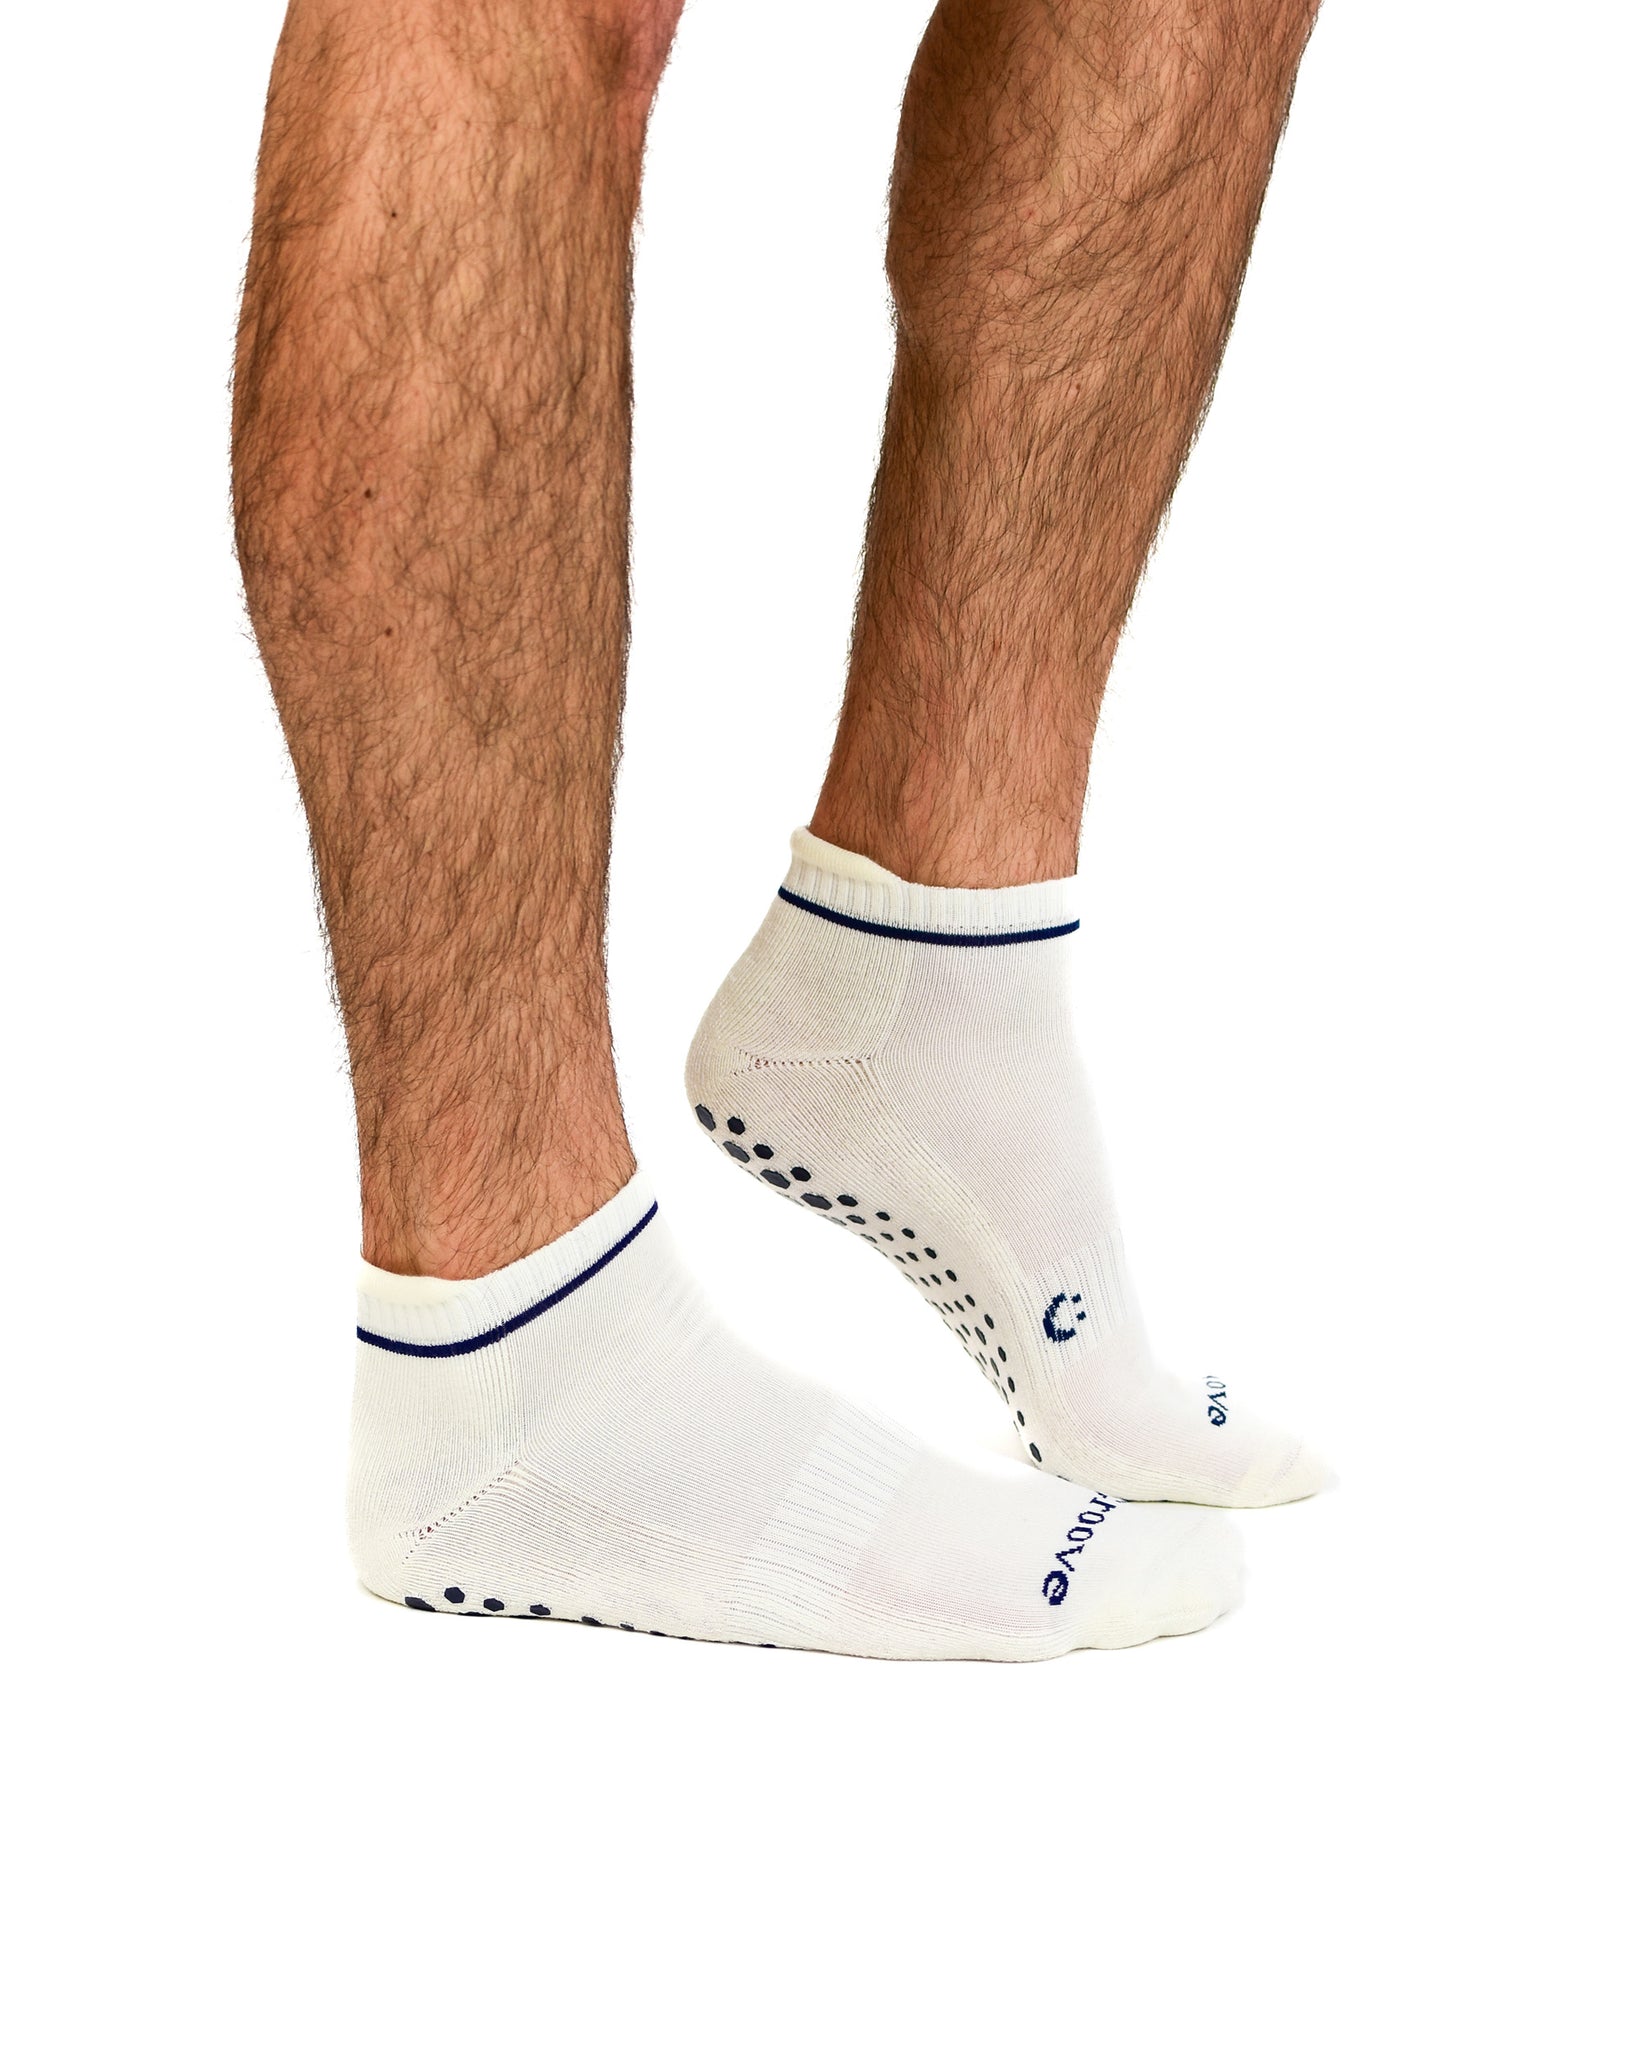 Grip Ankle Seamless Feel Sock (Adults) - Cloud